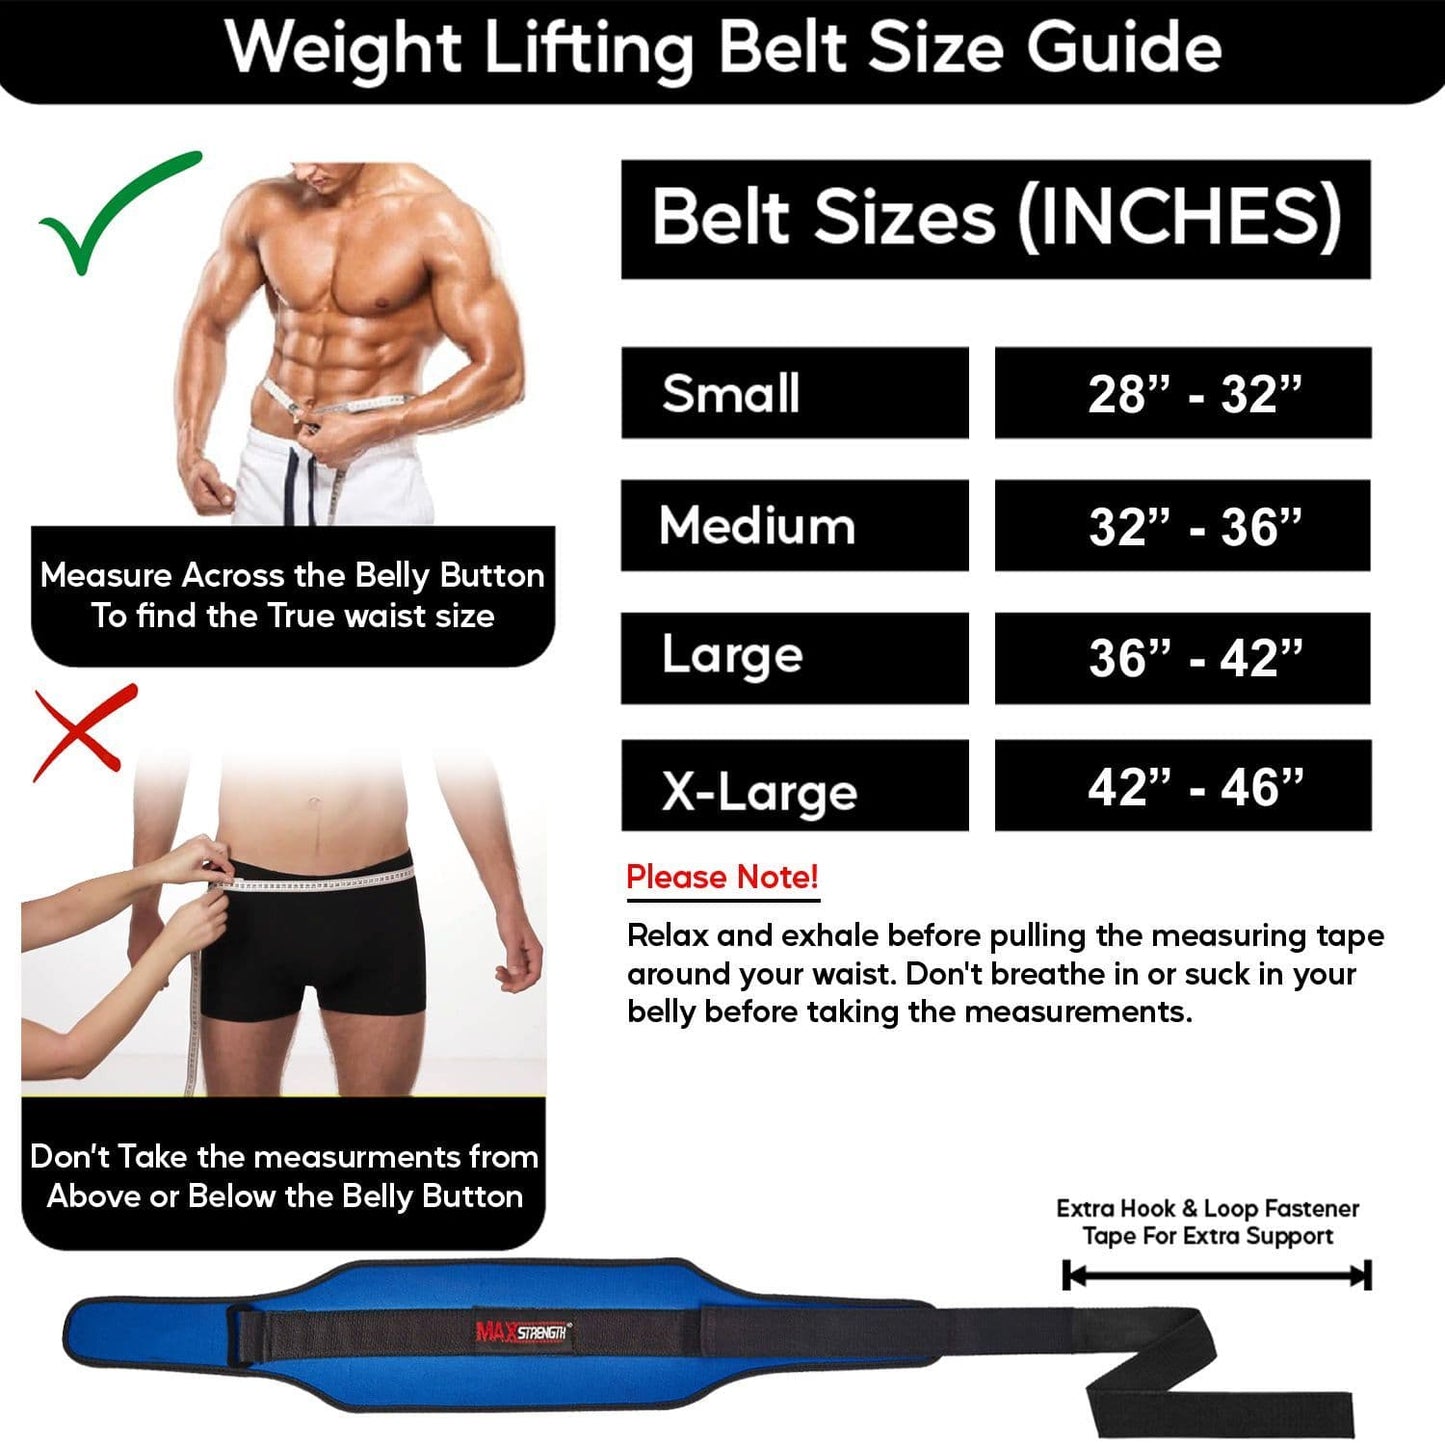 X MAXSTRENGTH Neoprene Weightlifting Back Support Belt Blue